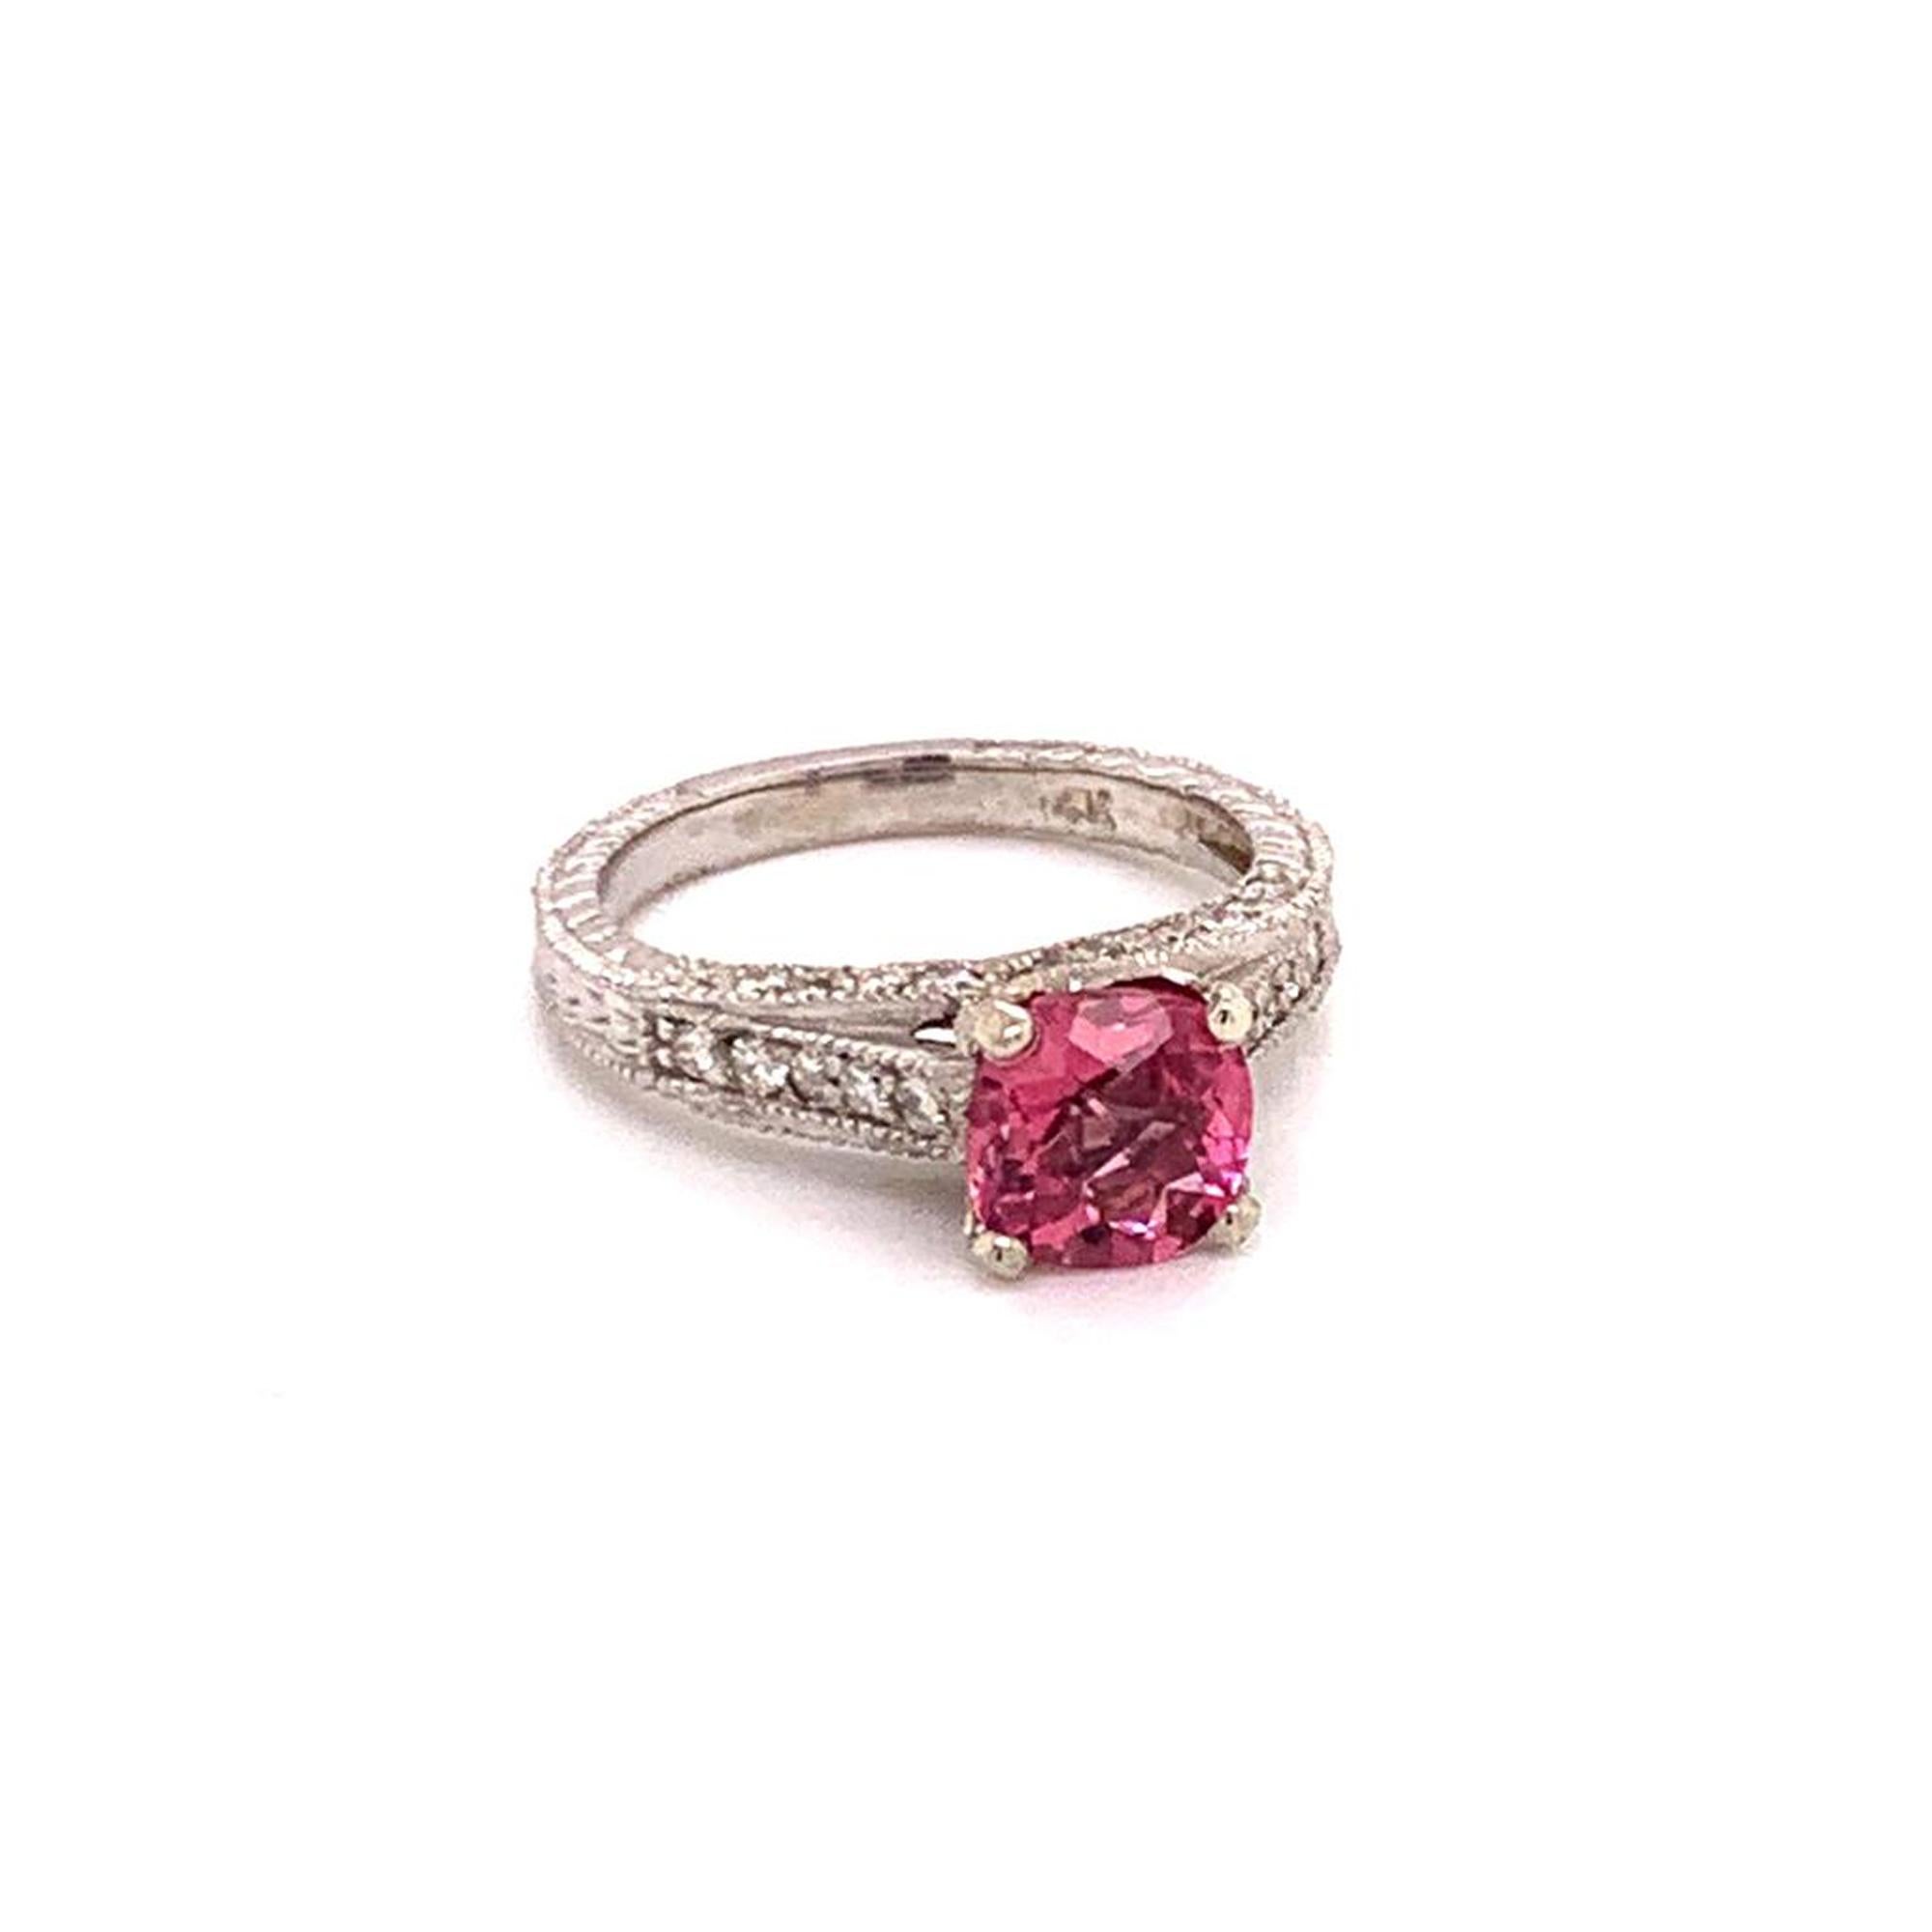 Women's Diamond Pink Tourmaline Rubellite Ring 6.5 14k White Gold 2.45 TCW Certified For Sale